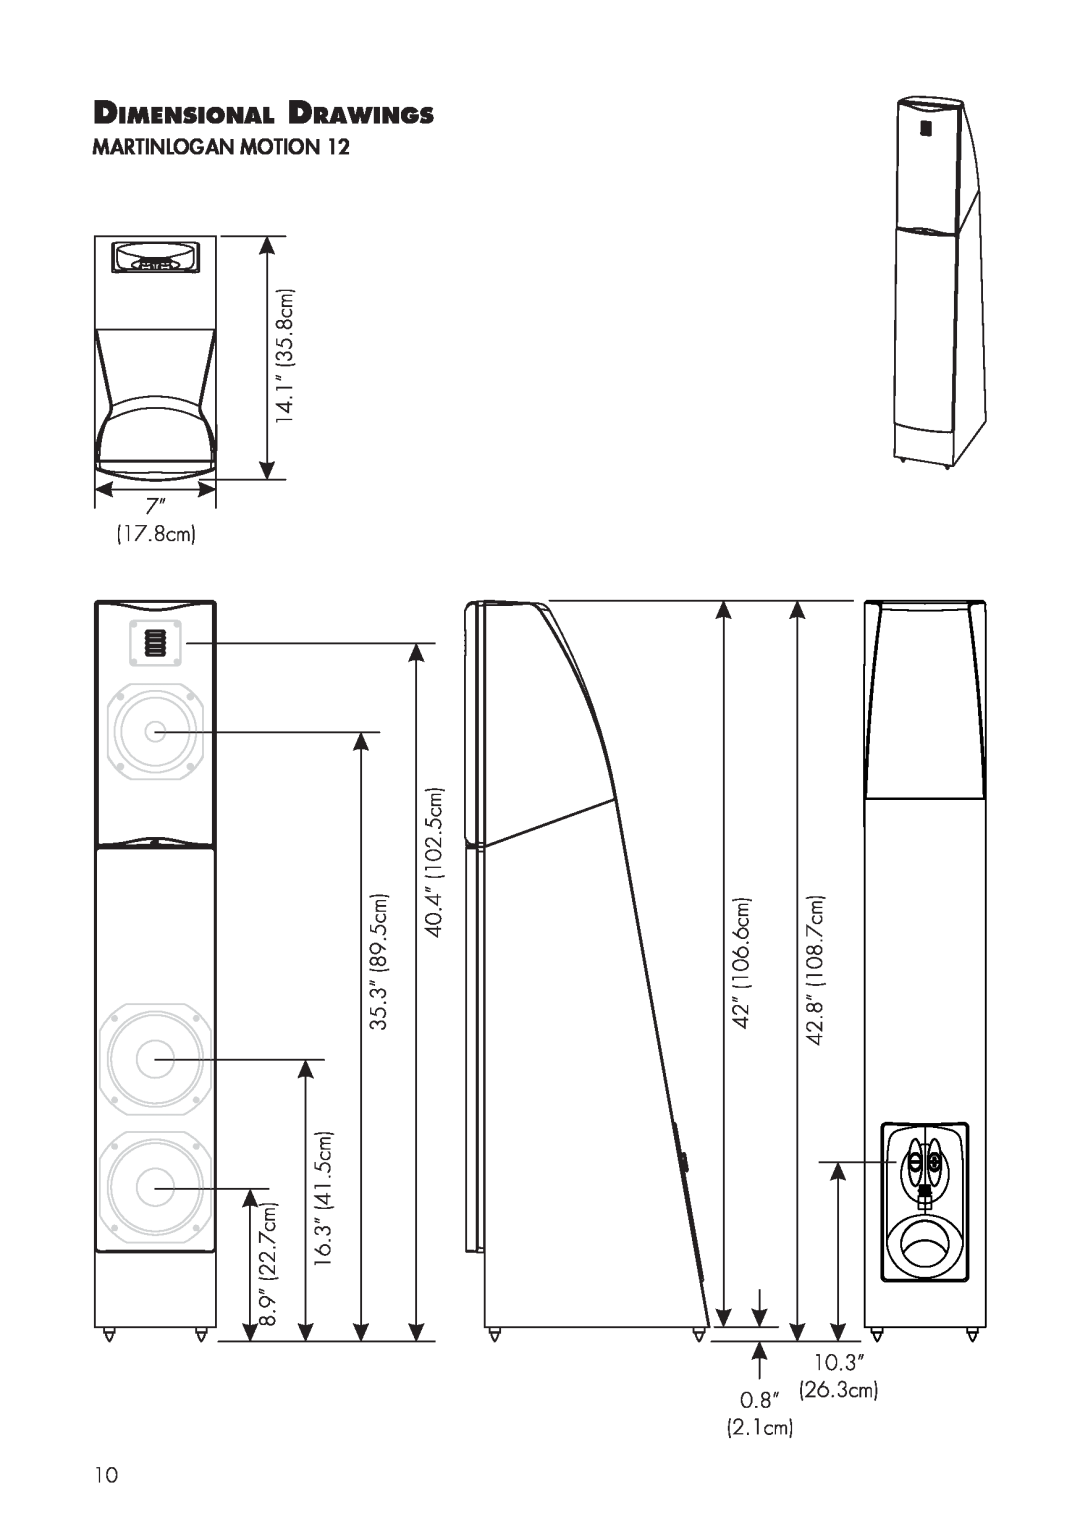 MartinLogan 12, 10 user manual Dimensional Drawings, Martinlogan Motion 